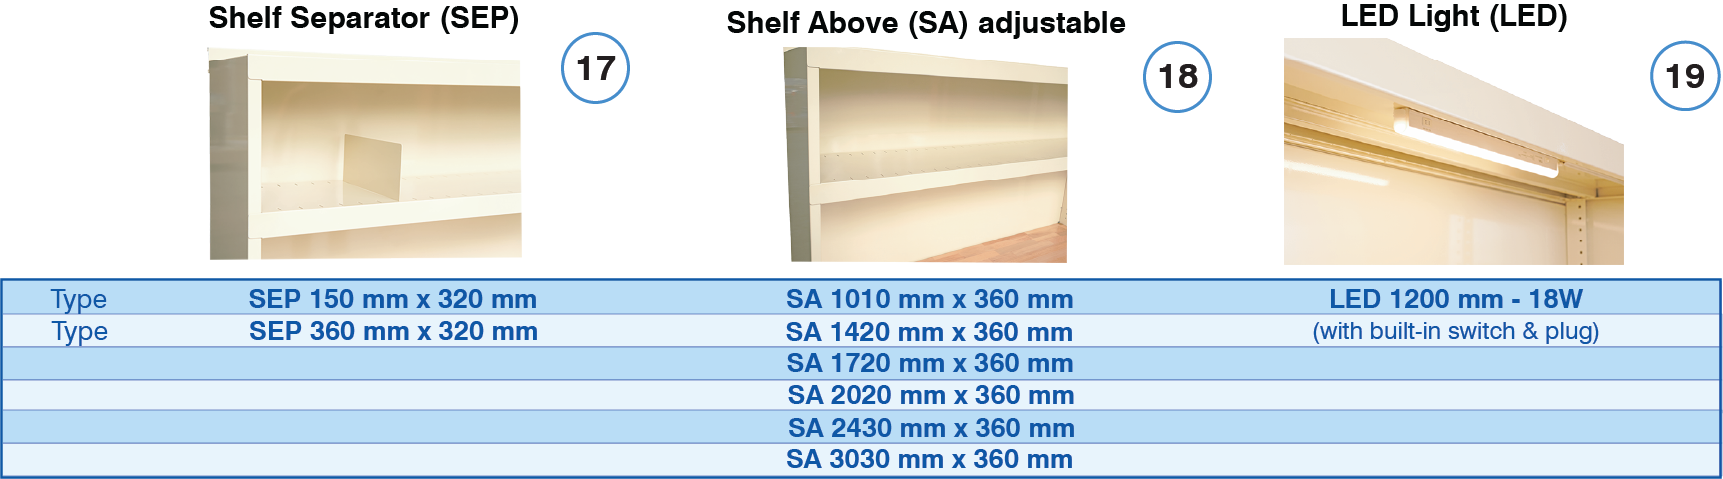 BAC Adjustable Shelf, LED Light and Shelf Separator Options